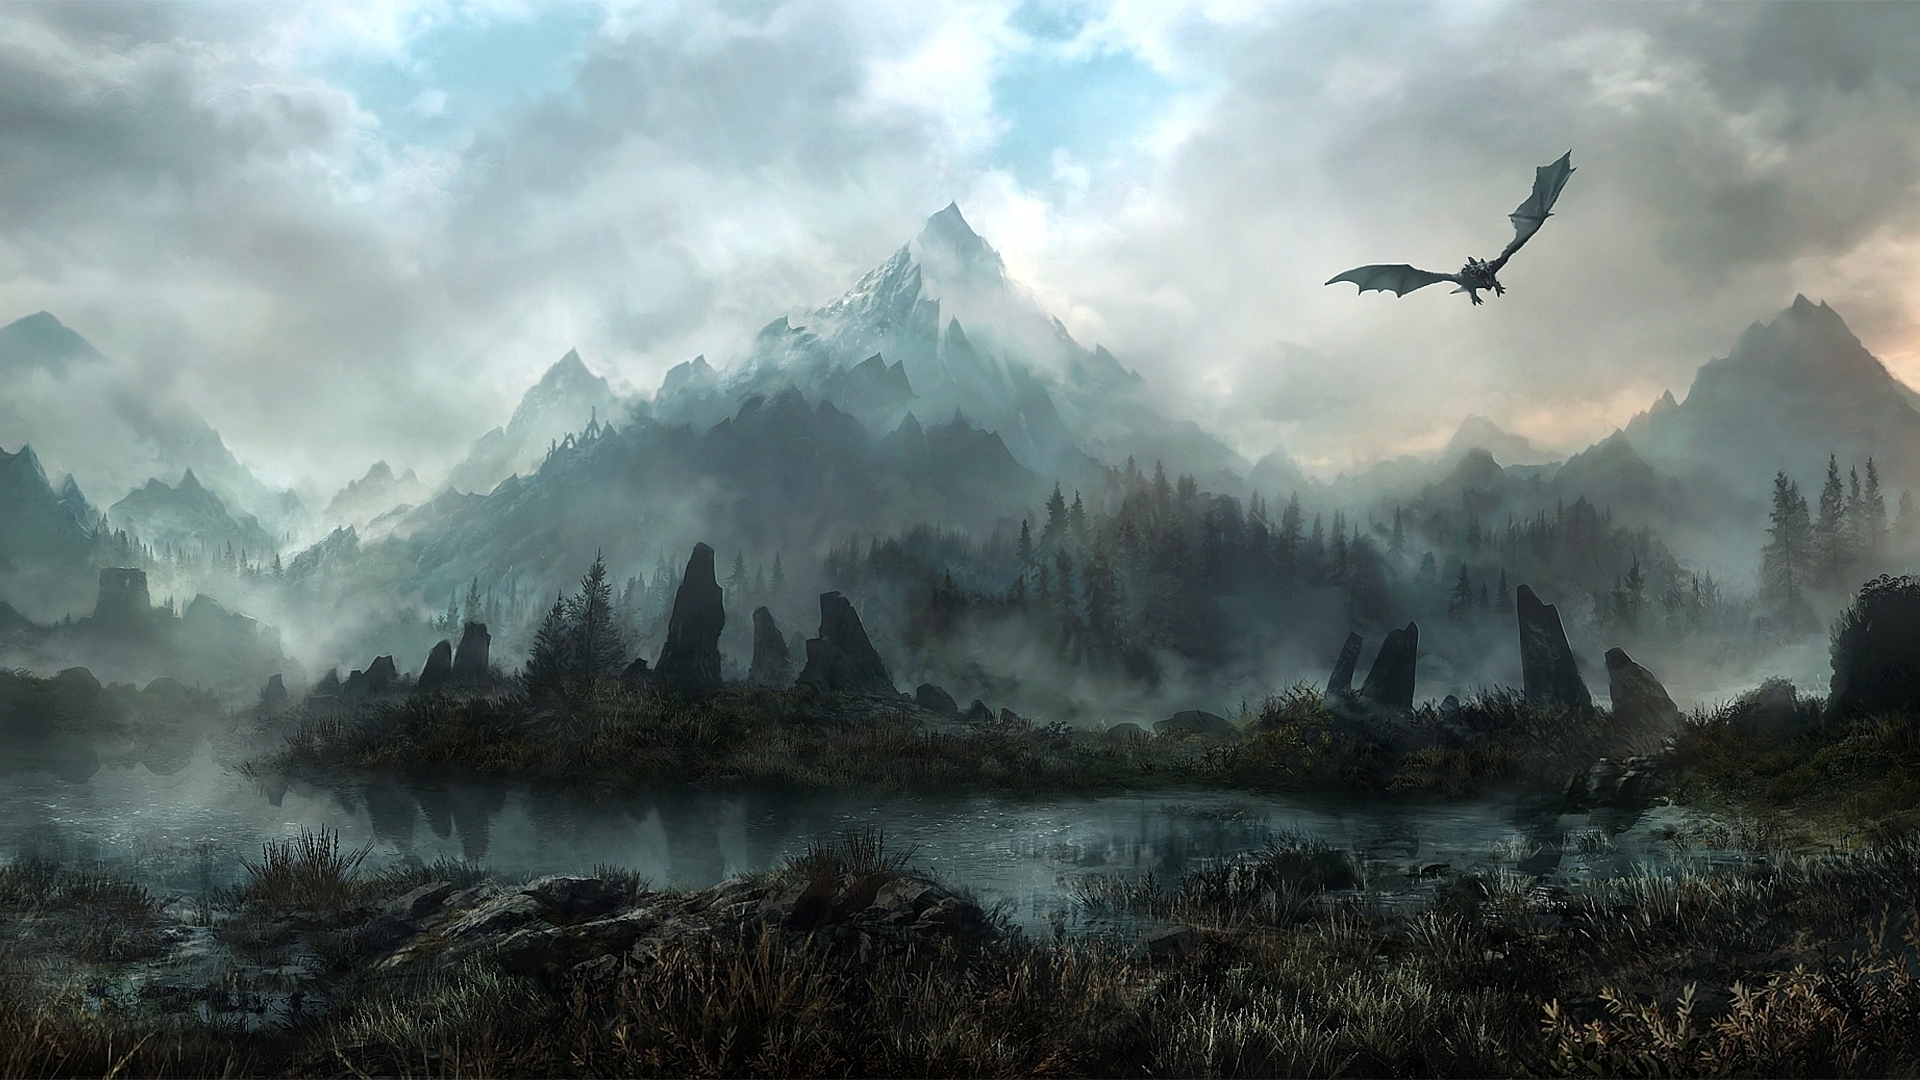 Download Wallpaper For 2560x1080 Resolution Skyrim Elder Scrolls Dragon Mountains Landscape Hd Games Wallpaper Better